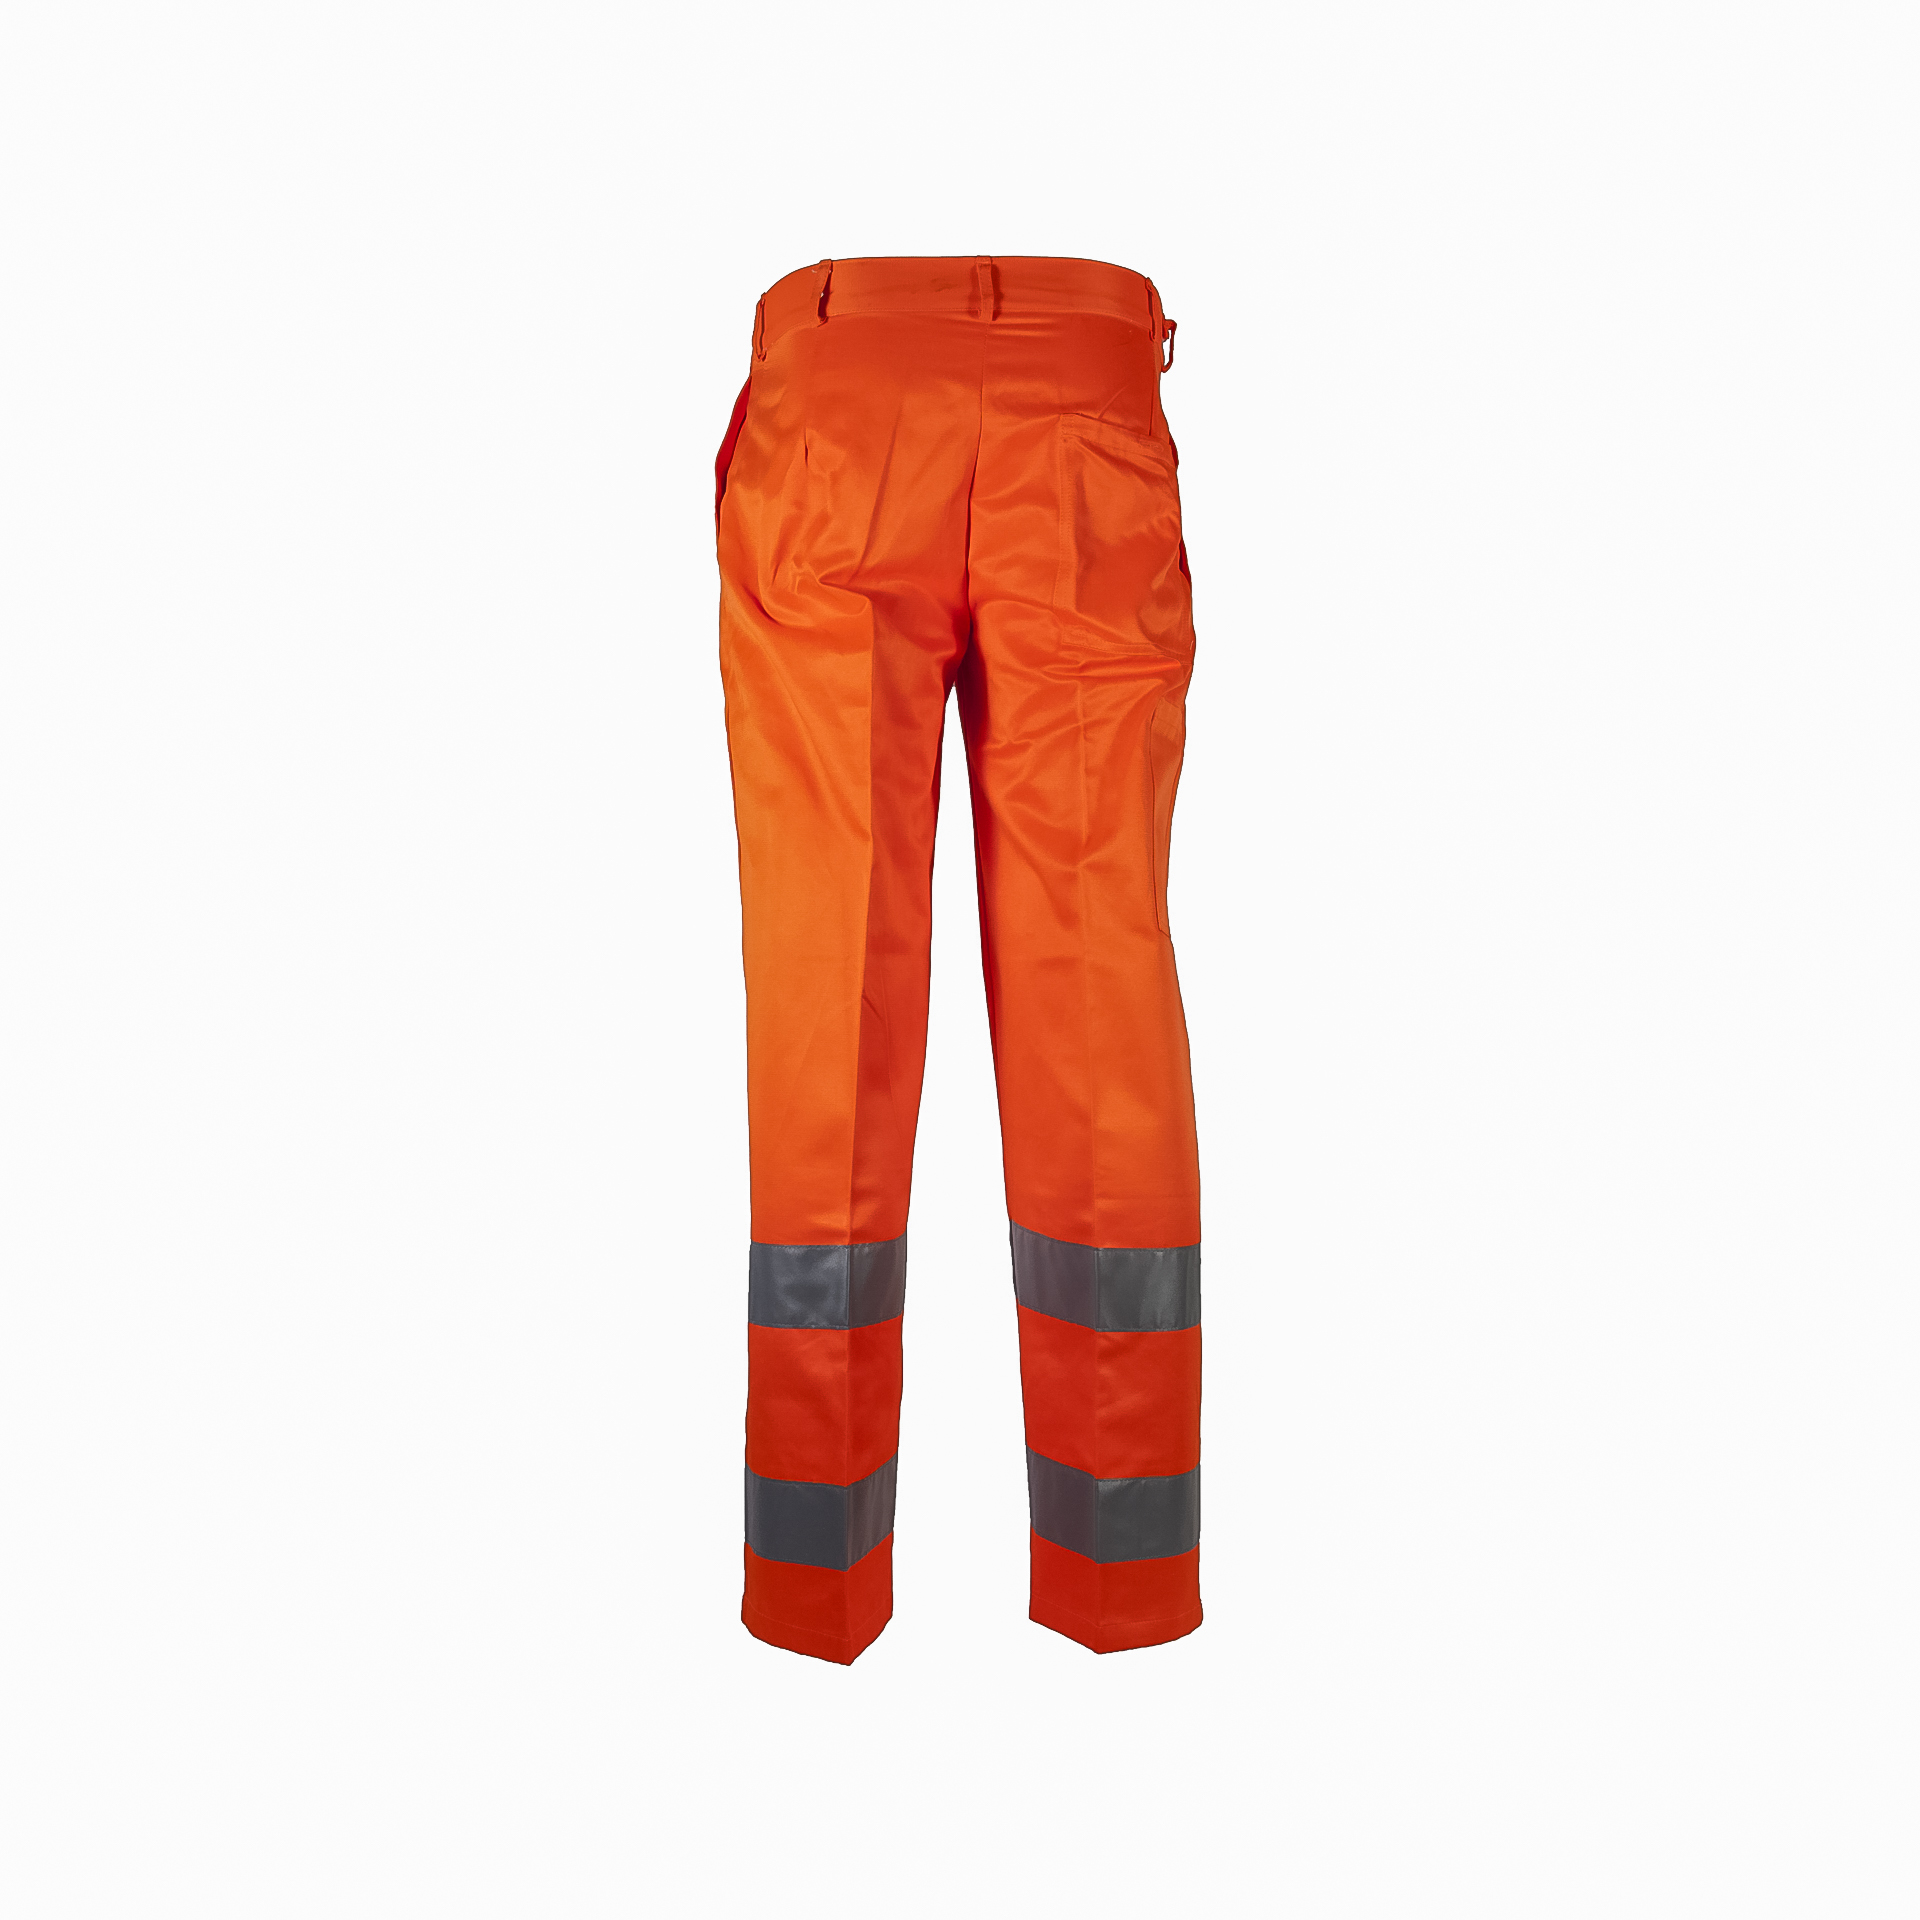 pantalone-reflex-neri-436302-arancio-dietri.png